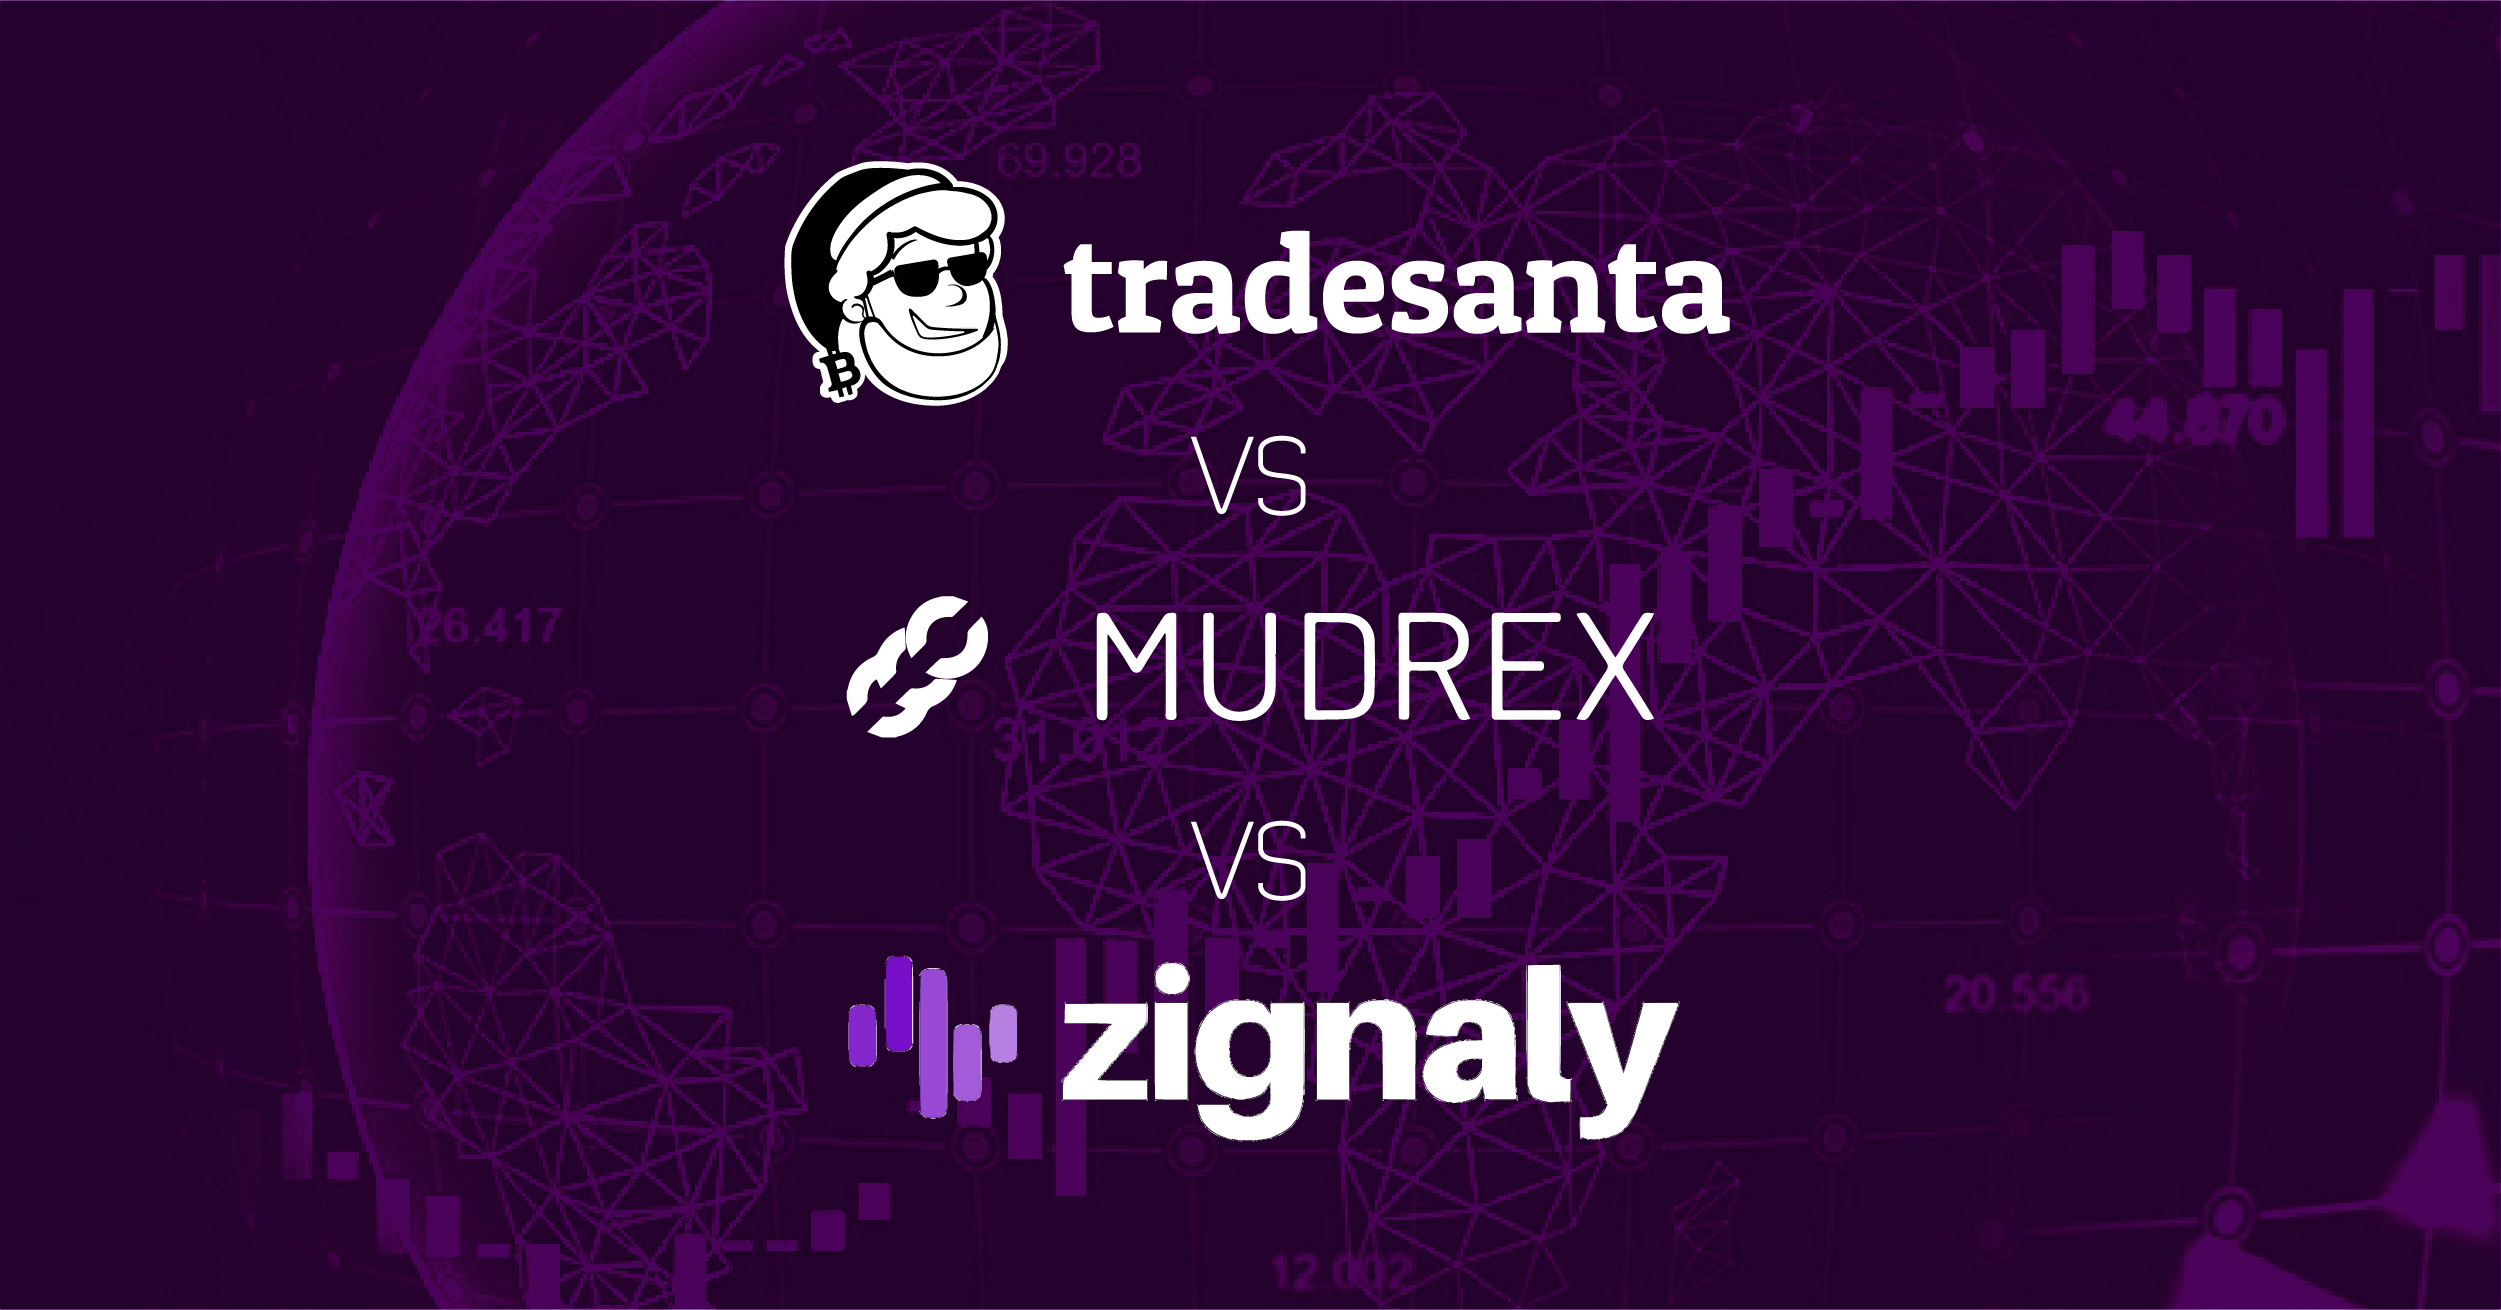 Tradesanta vs Mudrex vs Zignaly